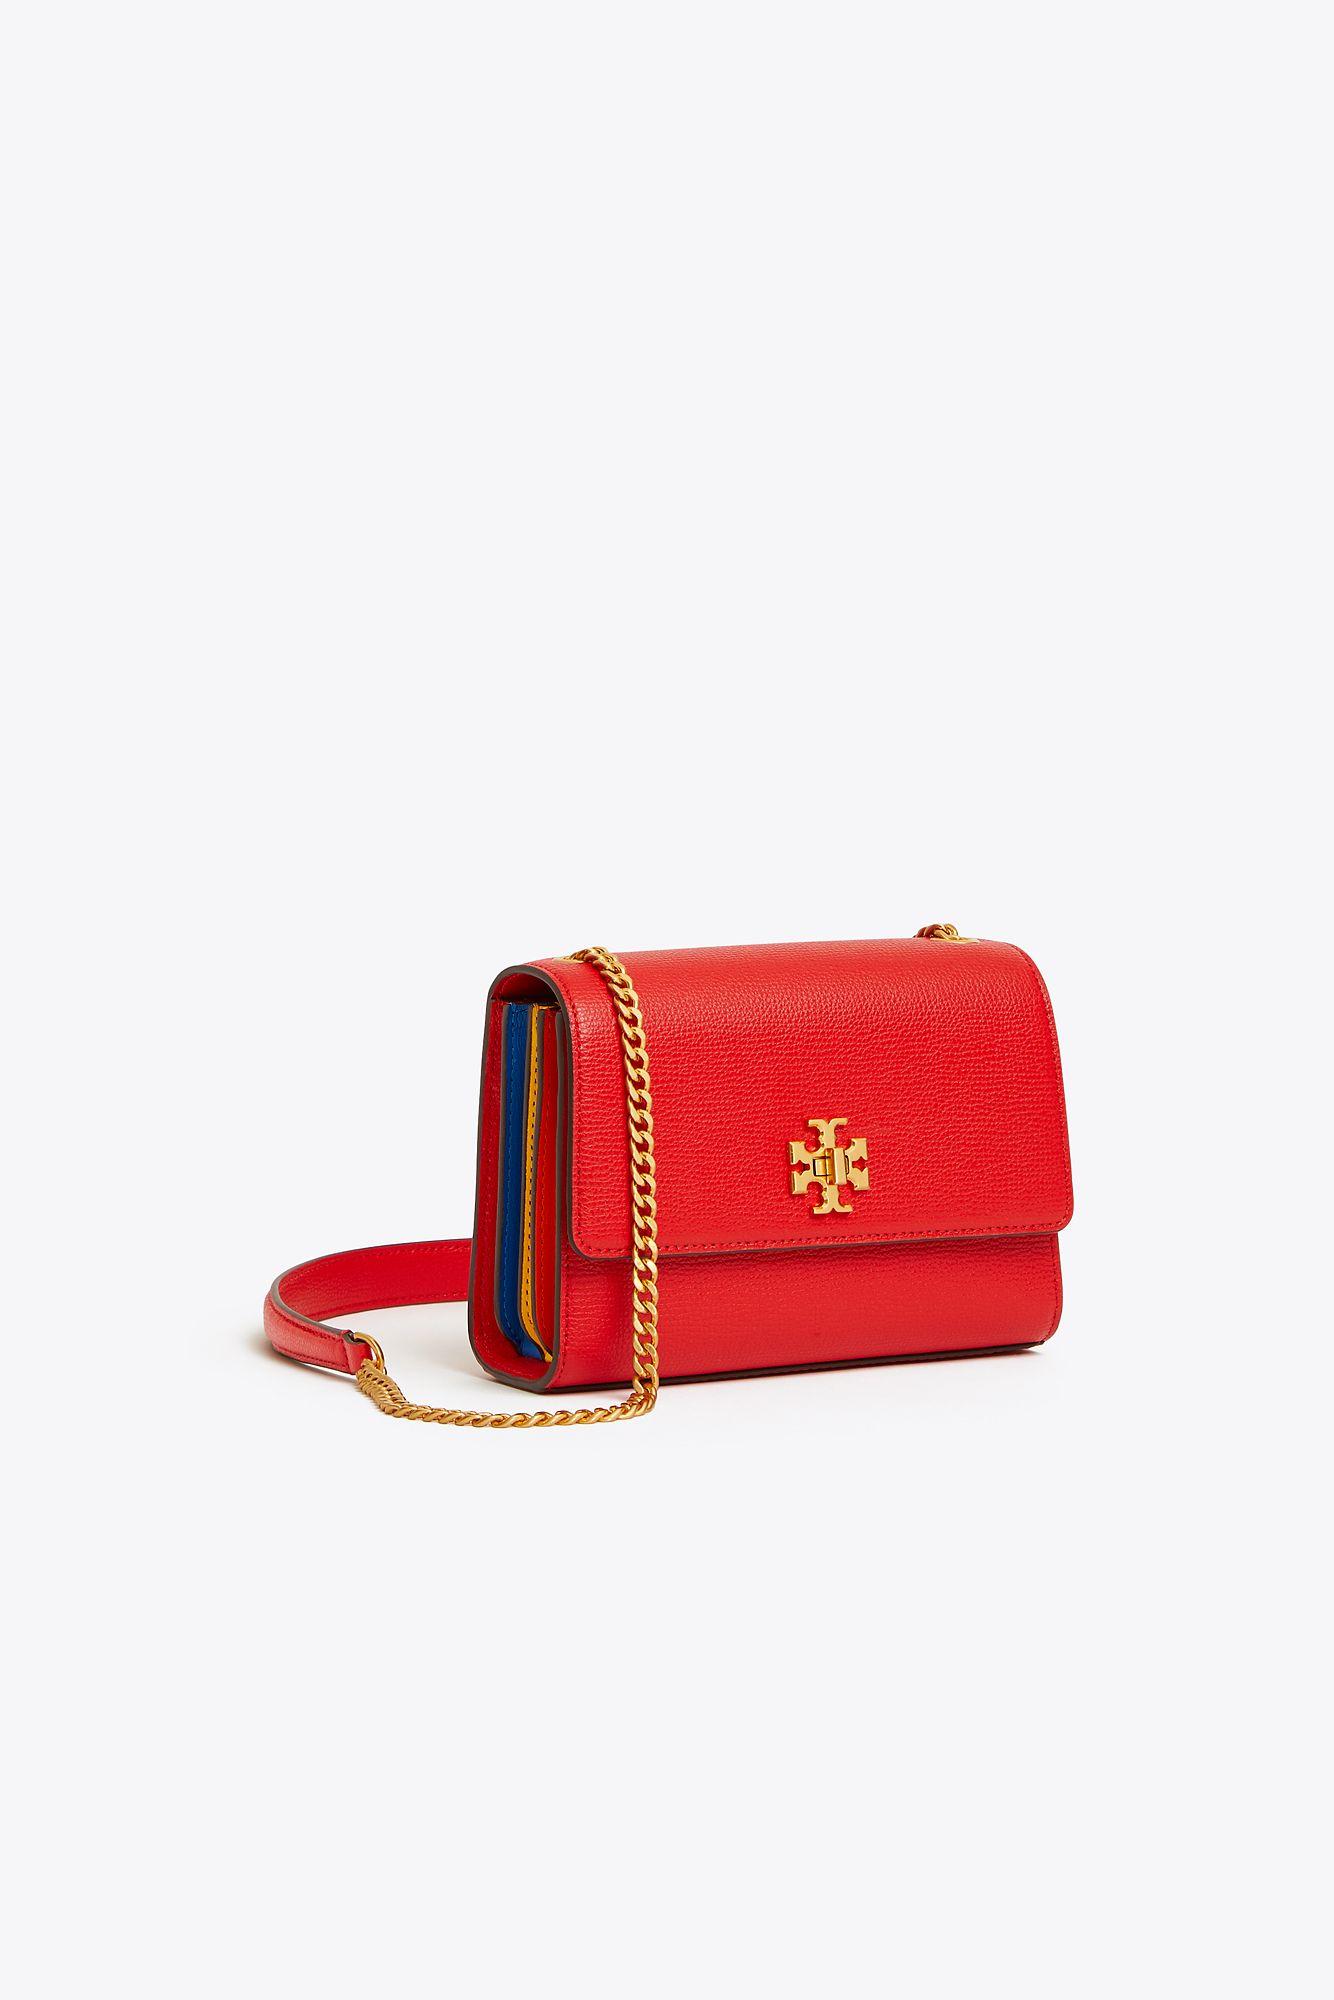 Tory Burch Leather Kira Mini Bag in Red | Lyst